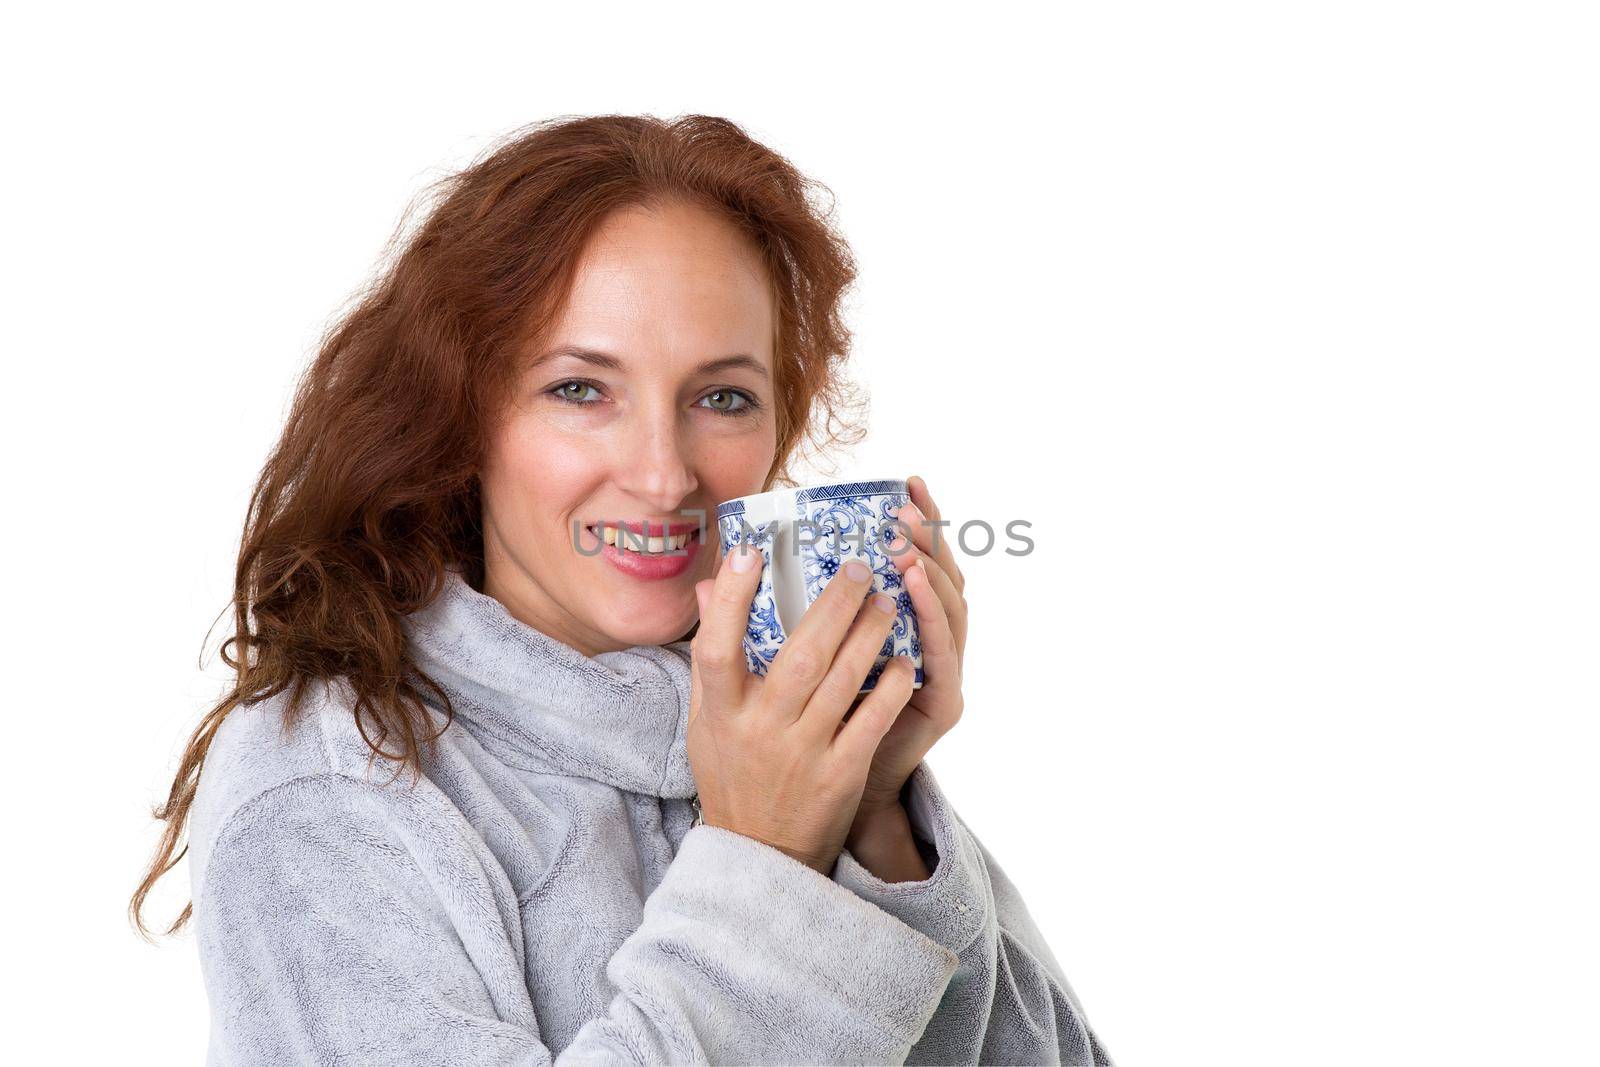 Smiling woman holding porcelain mug by kolesnikov_studio